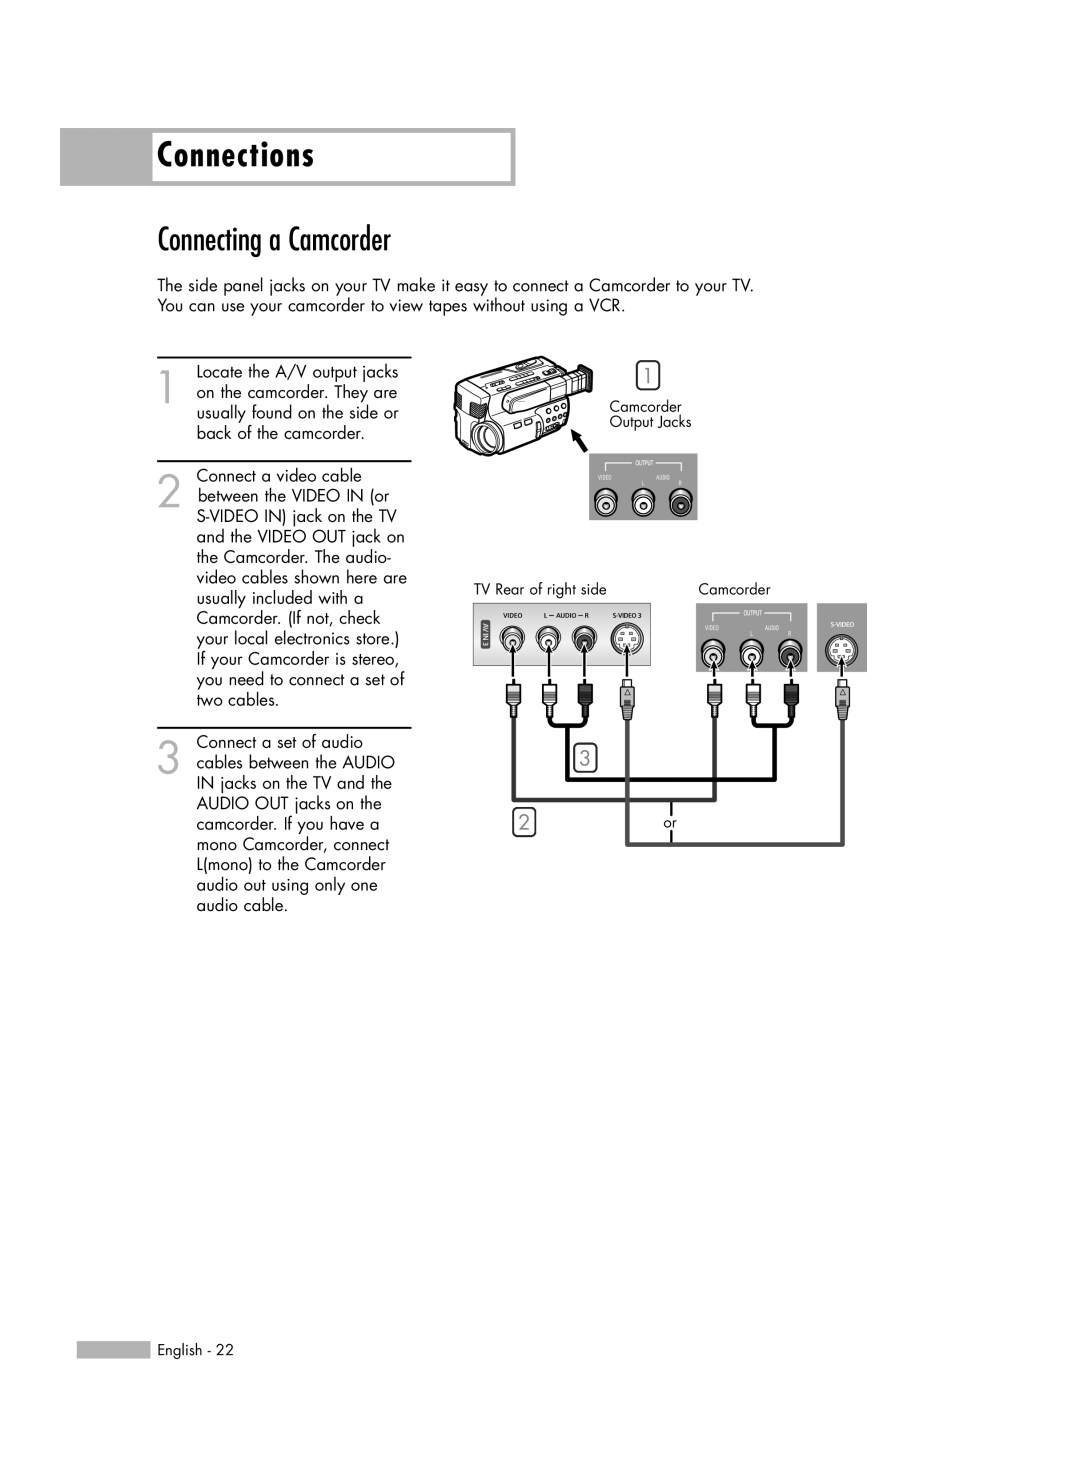 Samsung HL-R5678W, HL-R6178W, HL-R7178W manual Connections, Connecting a Camcorder 